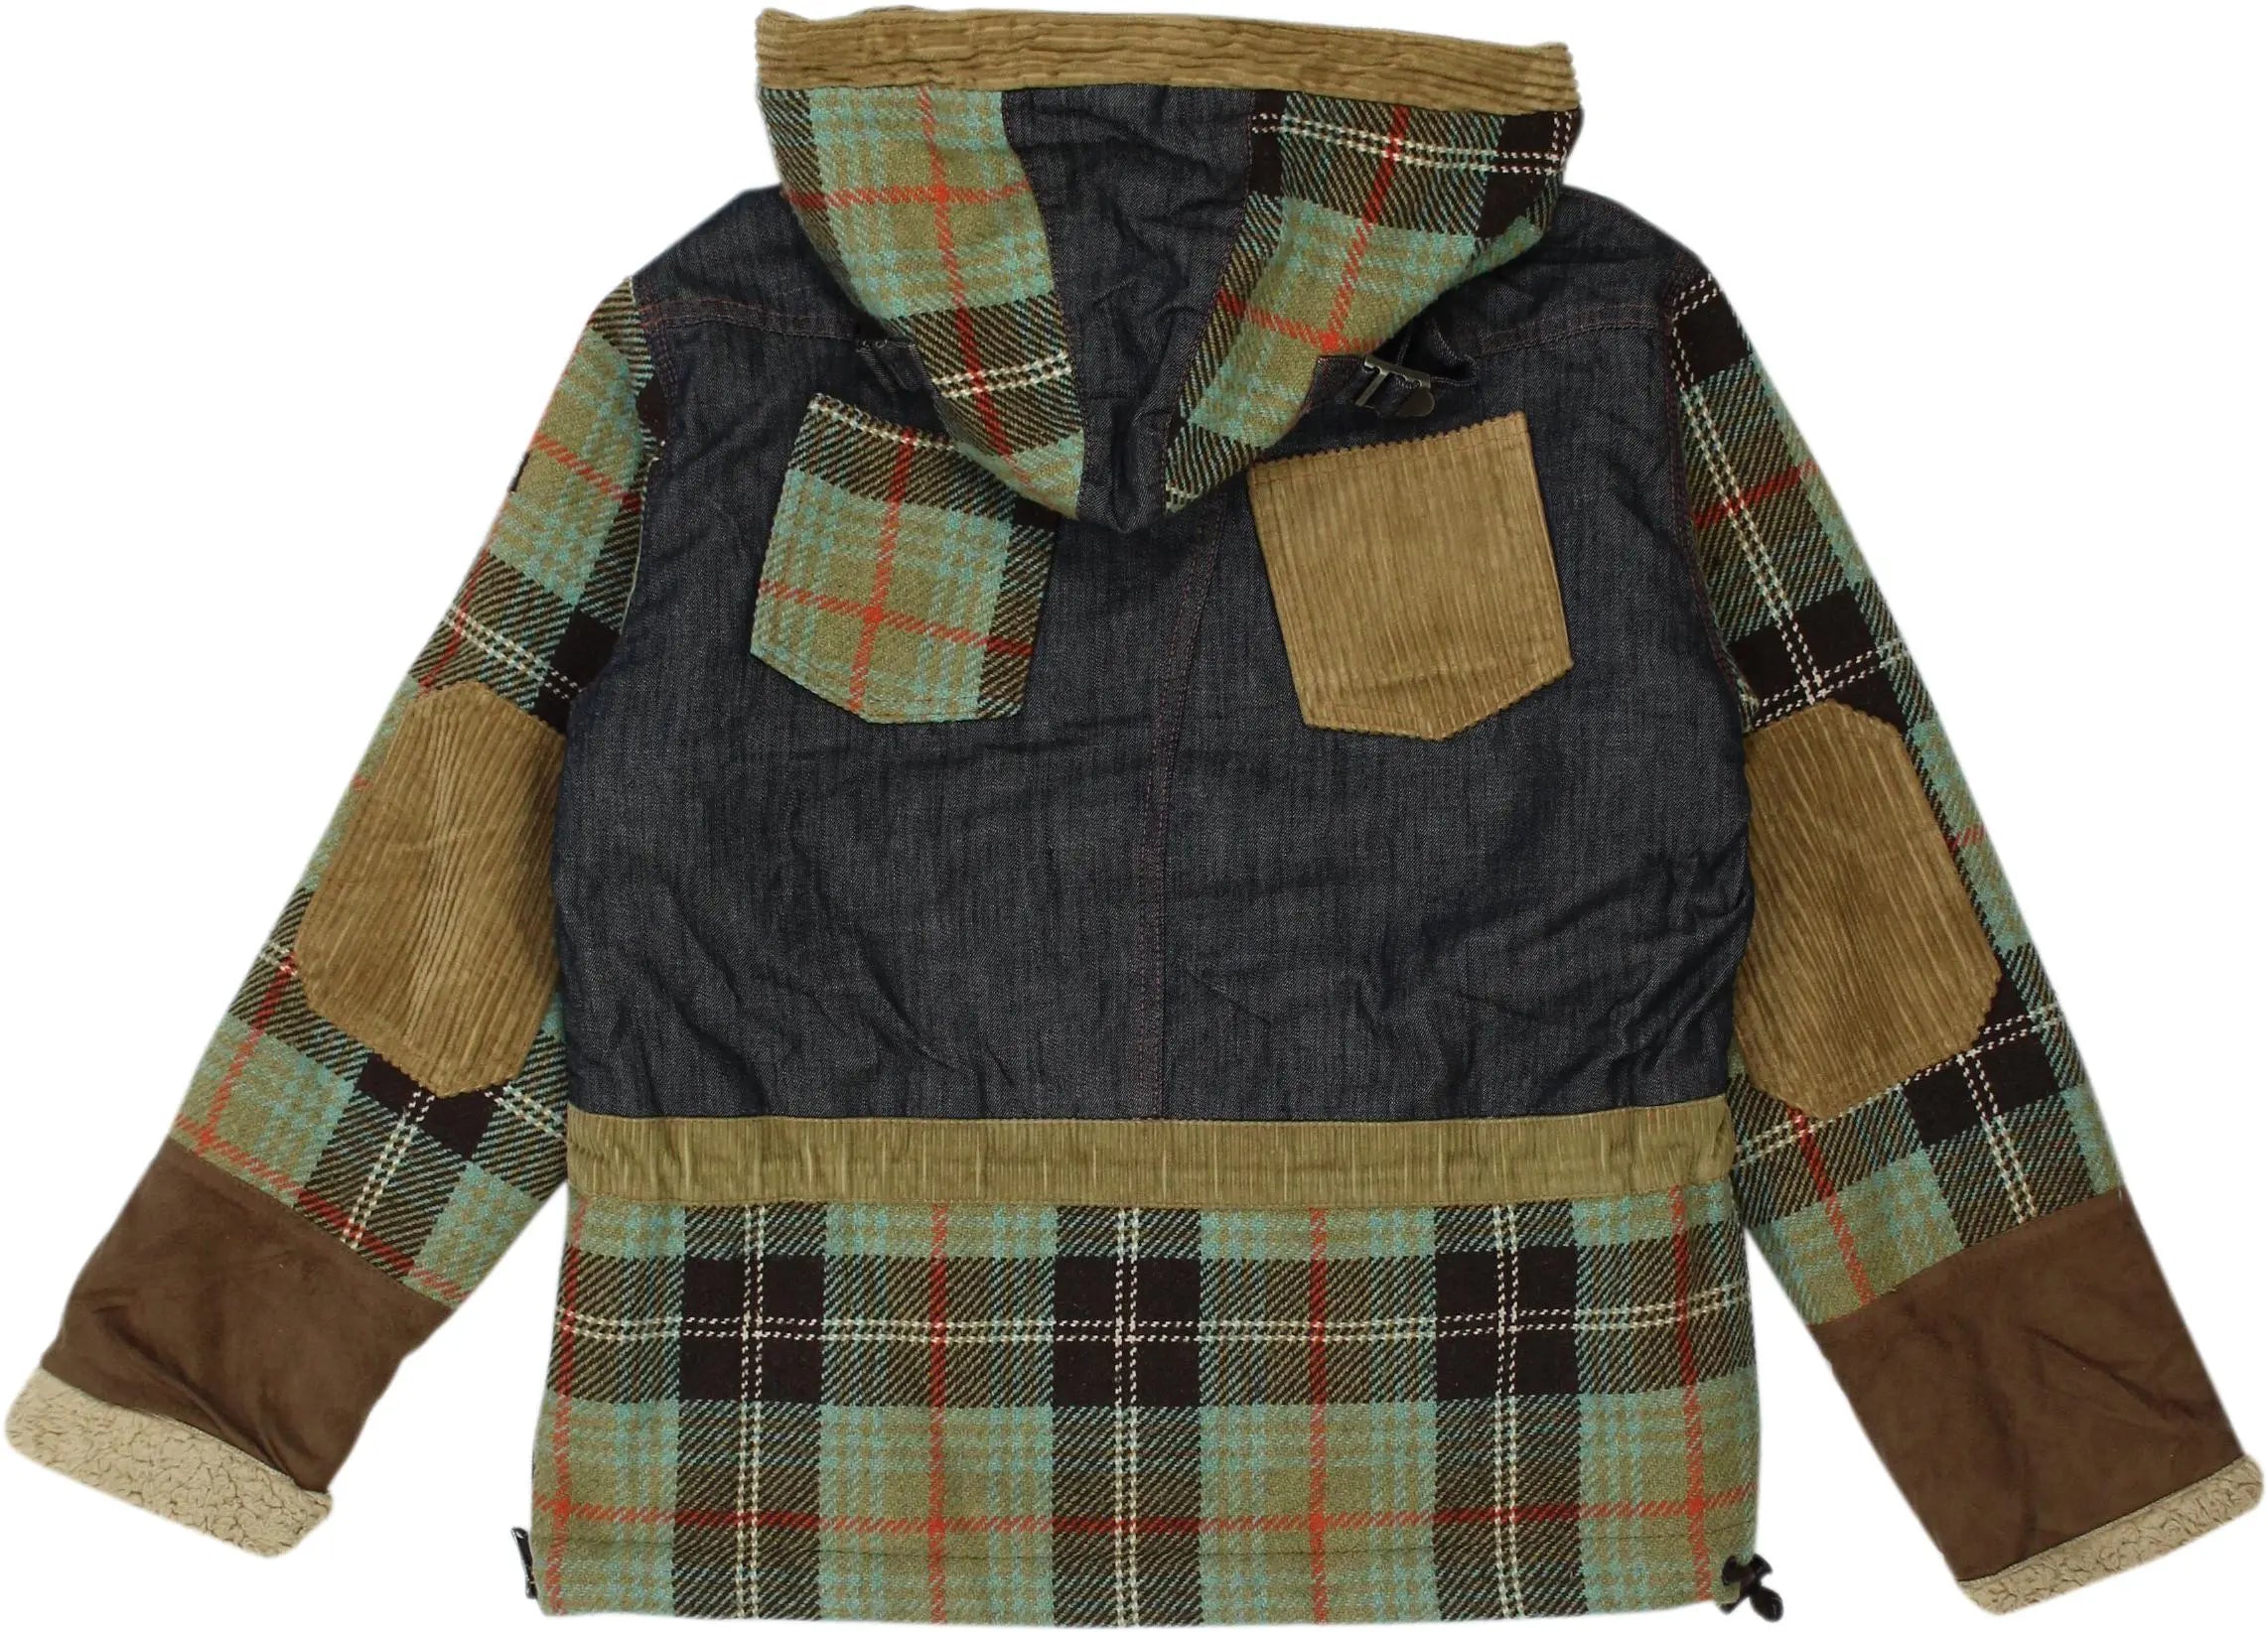 Napapijri - Checked Jacket by Napapijri- ThriftTale.com - Vintage and second handclothing